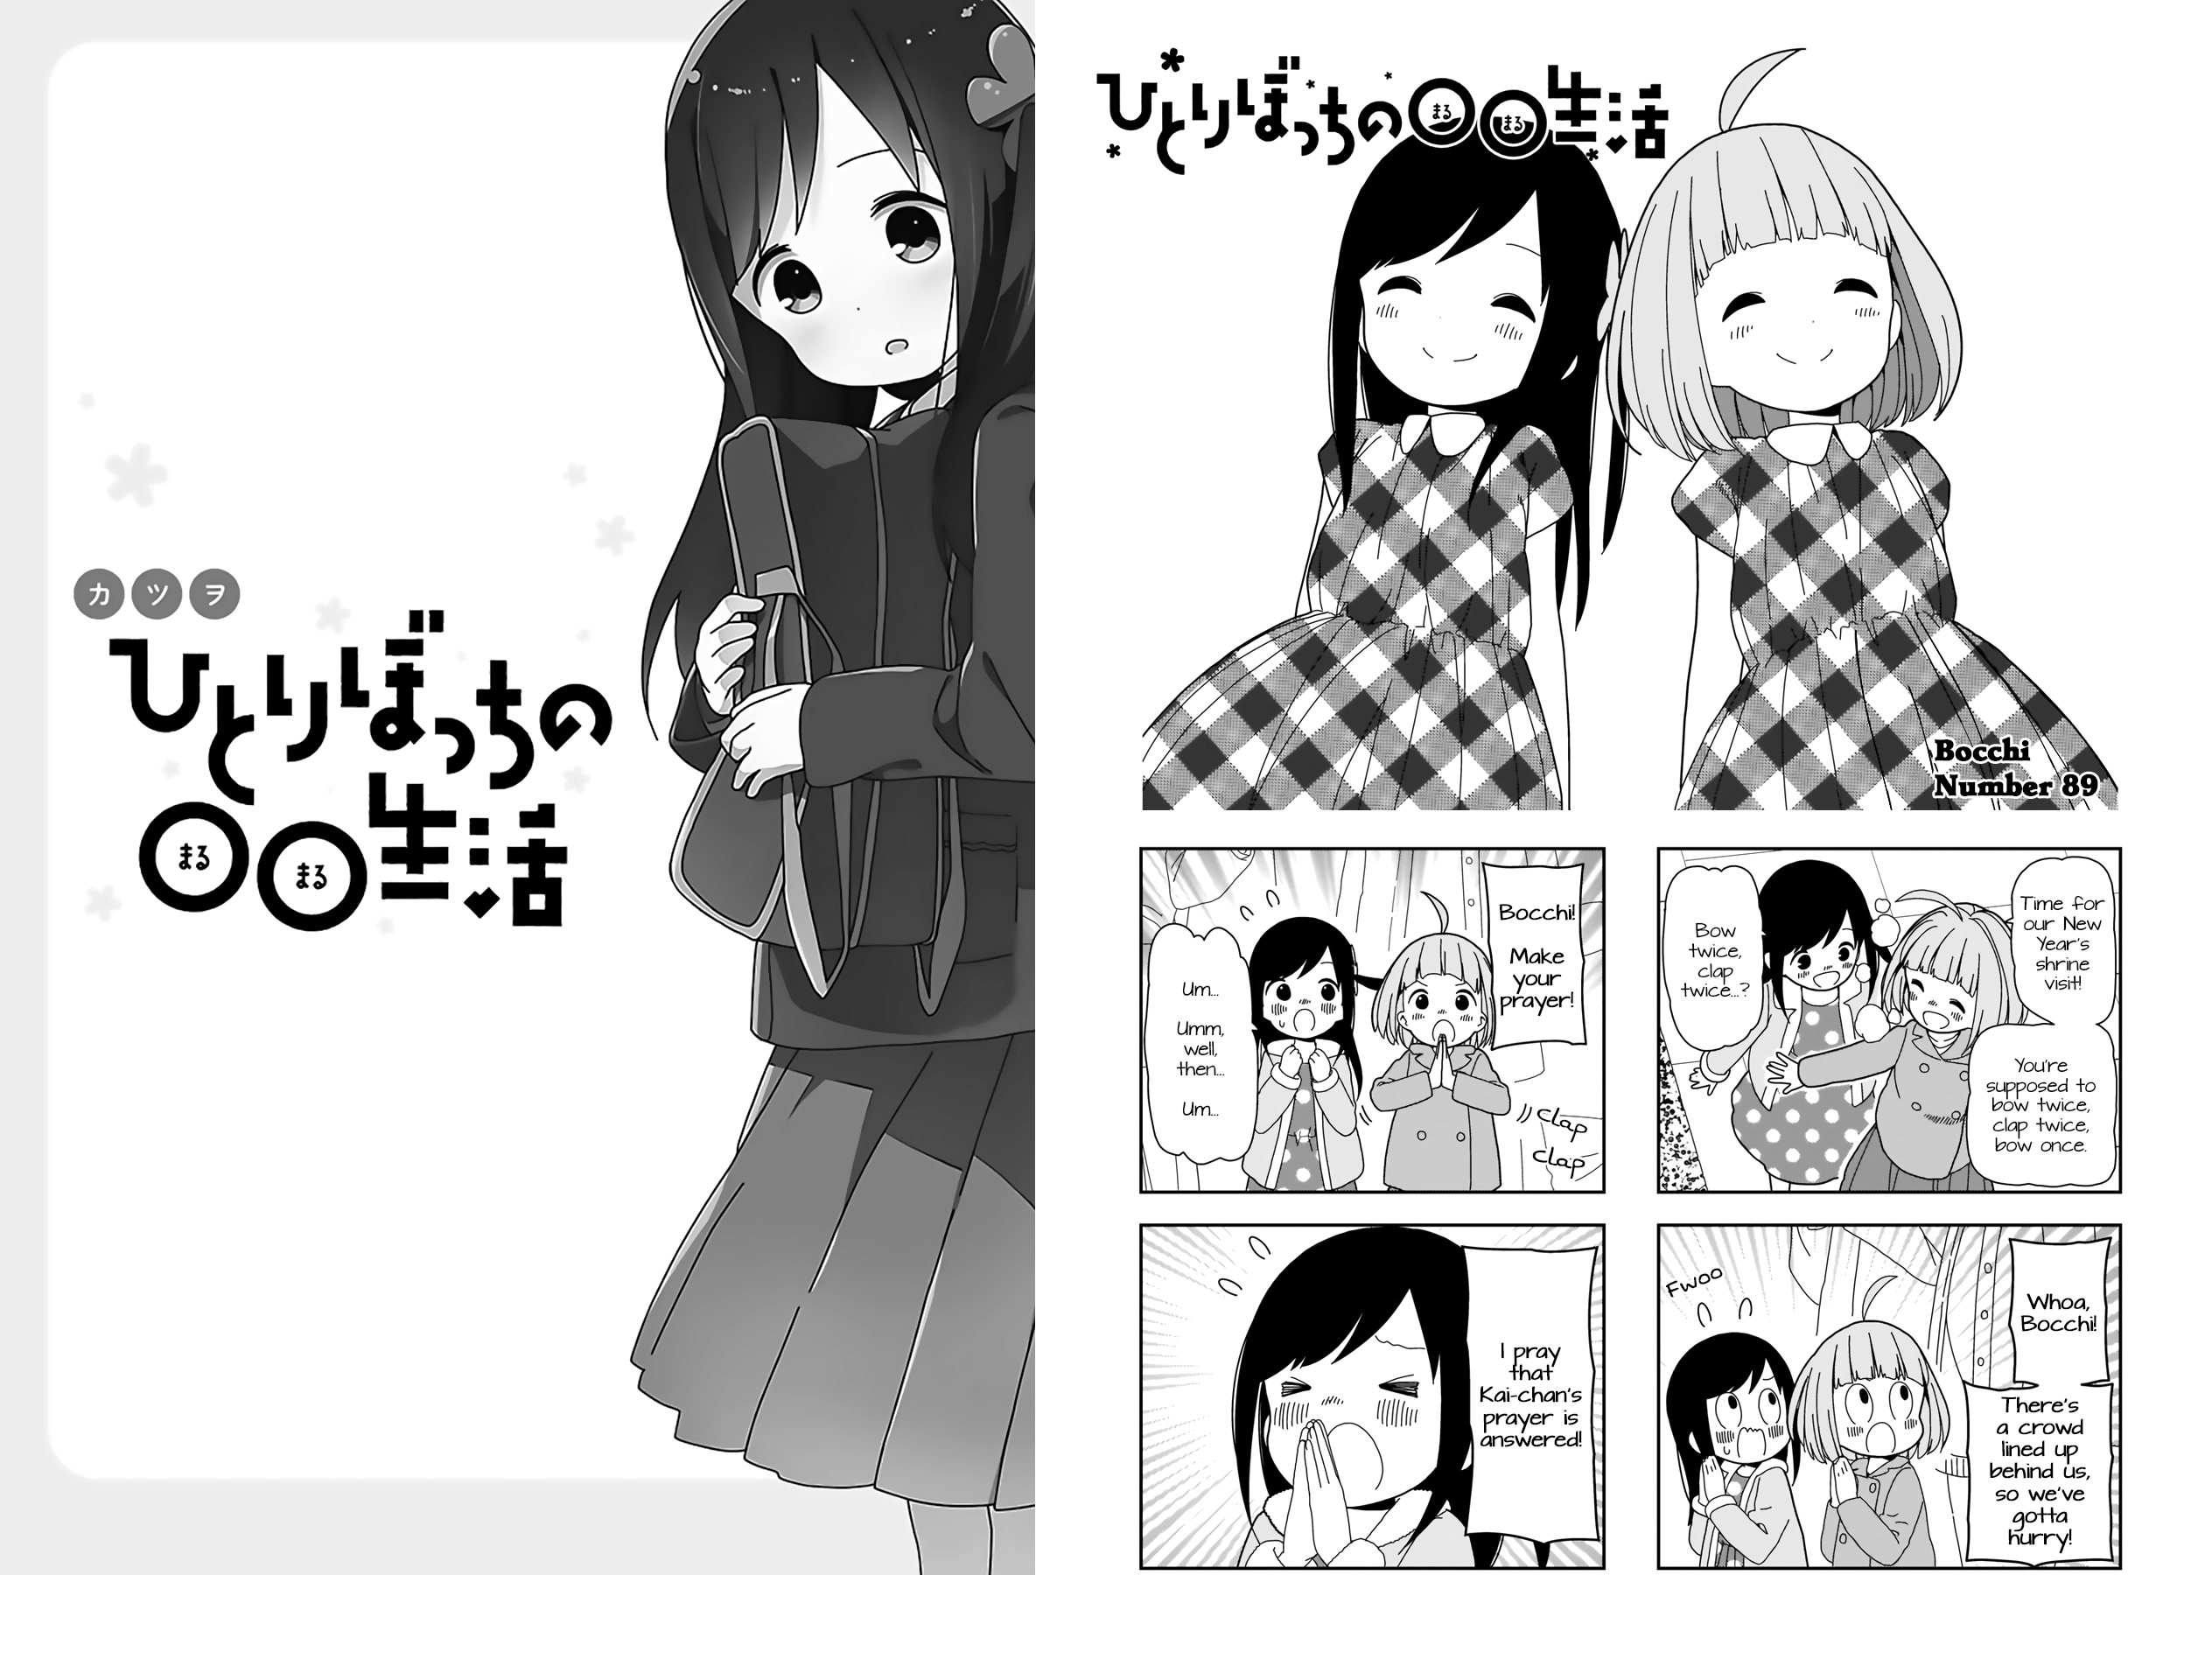 Characters appearing in Hitoribocchi no OO Seikatsu Anime